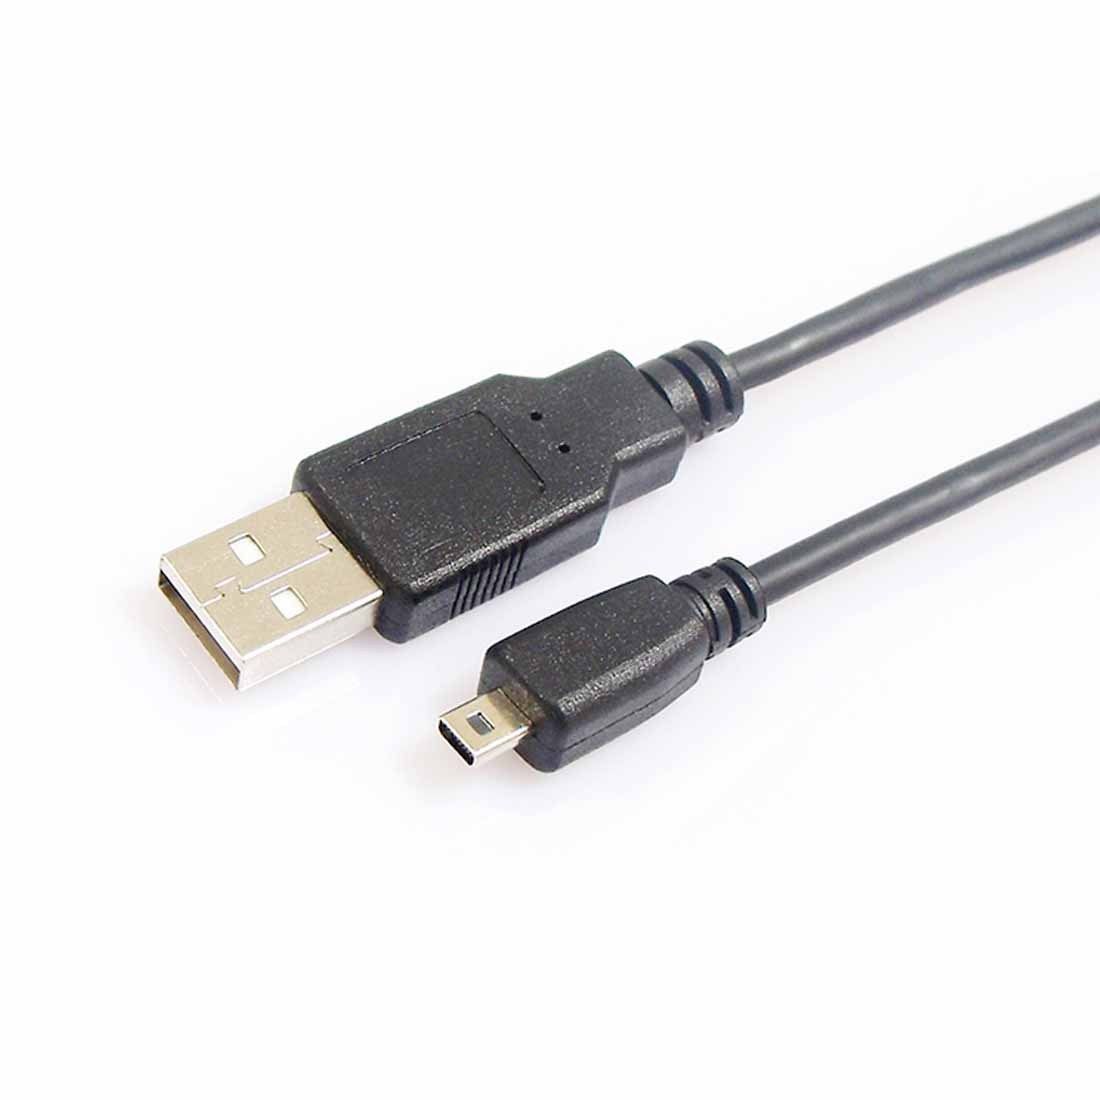 Usb Kabel/Voor Pentax Optio Camera I-USB7 I-USB17 Optio S S4 S40 S45 S4i S50 Optio 50 550 555 60 750z A10 A20 A30 E10 M10 M20